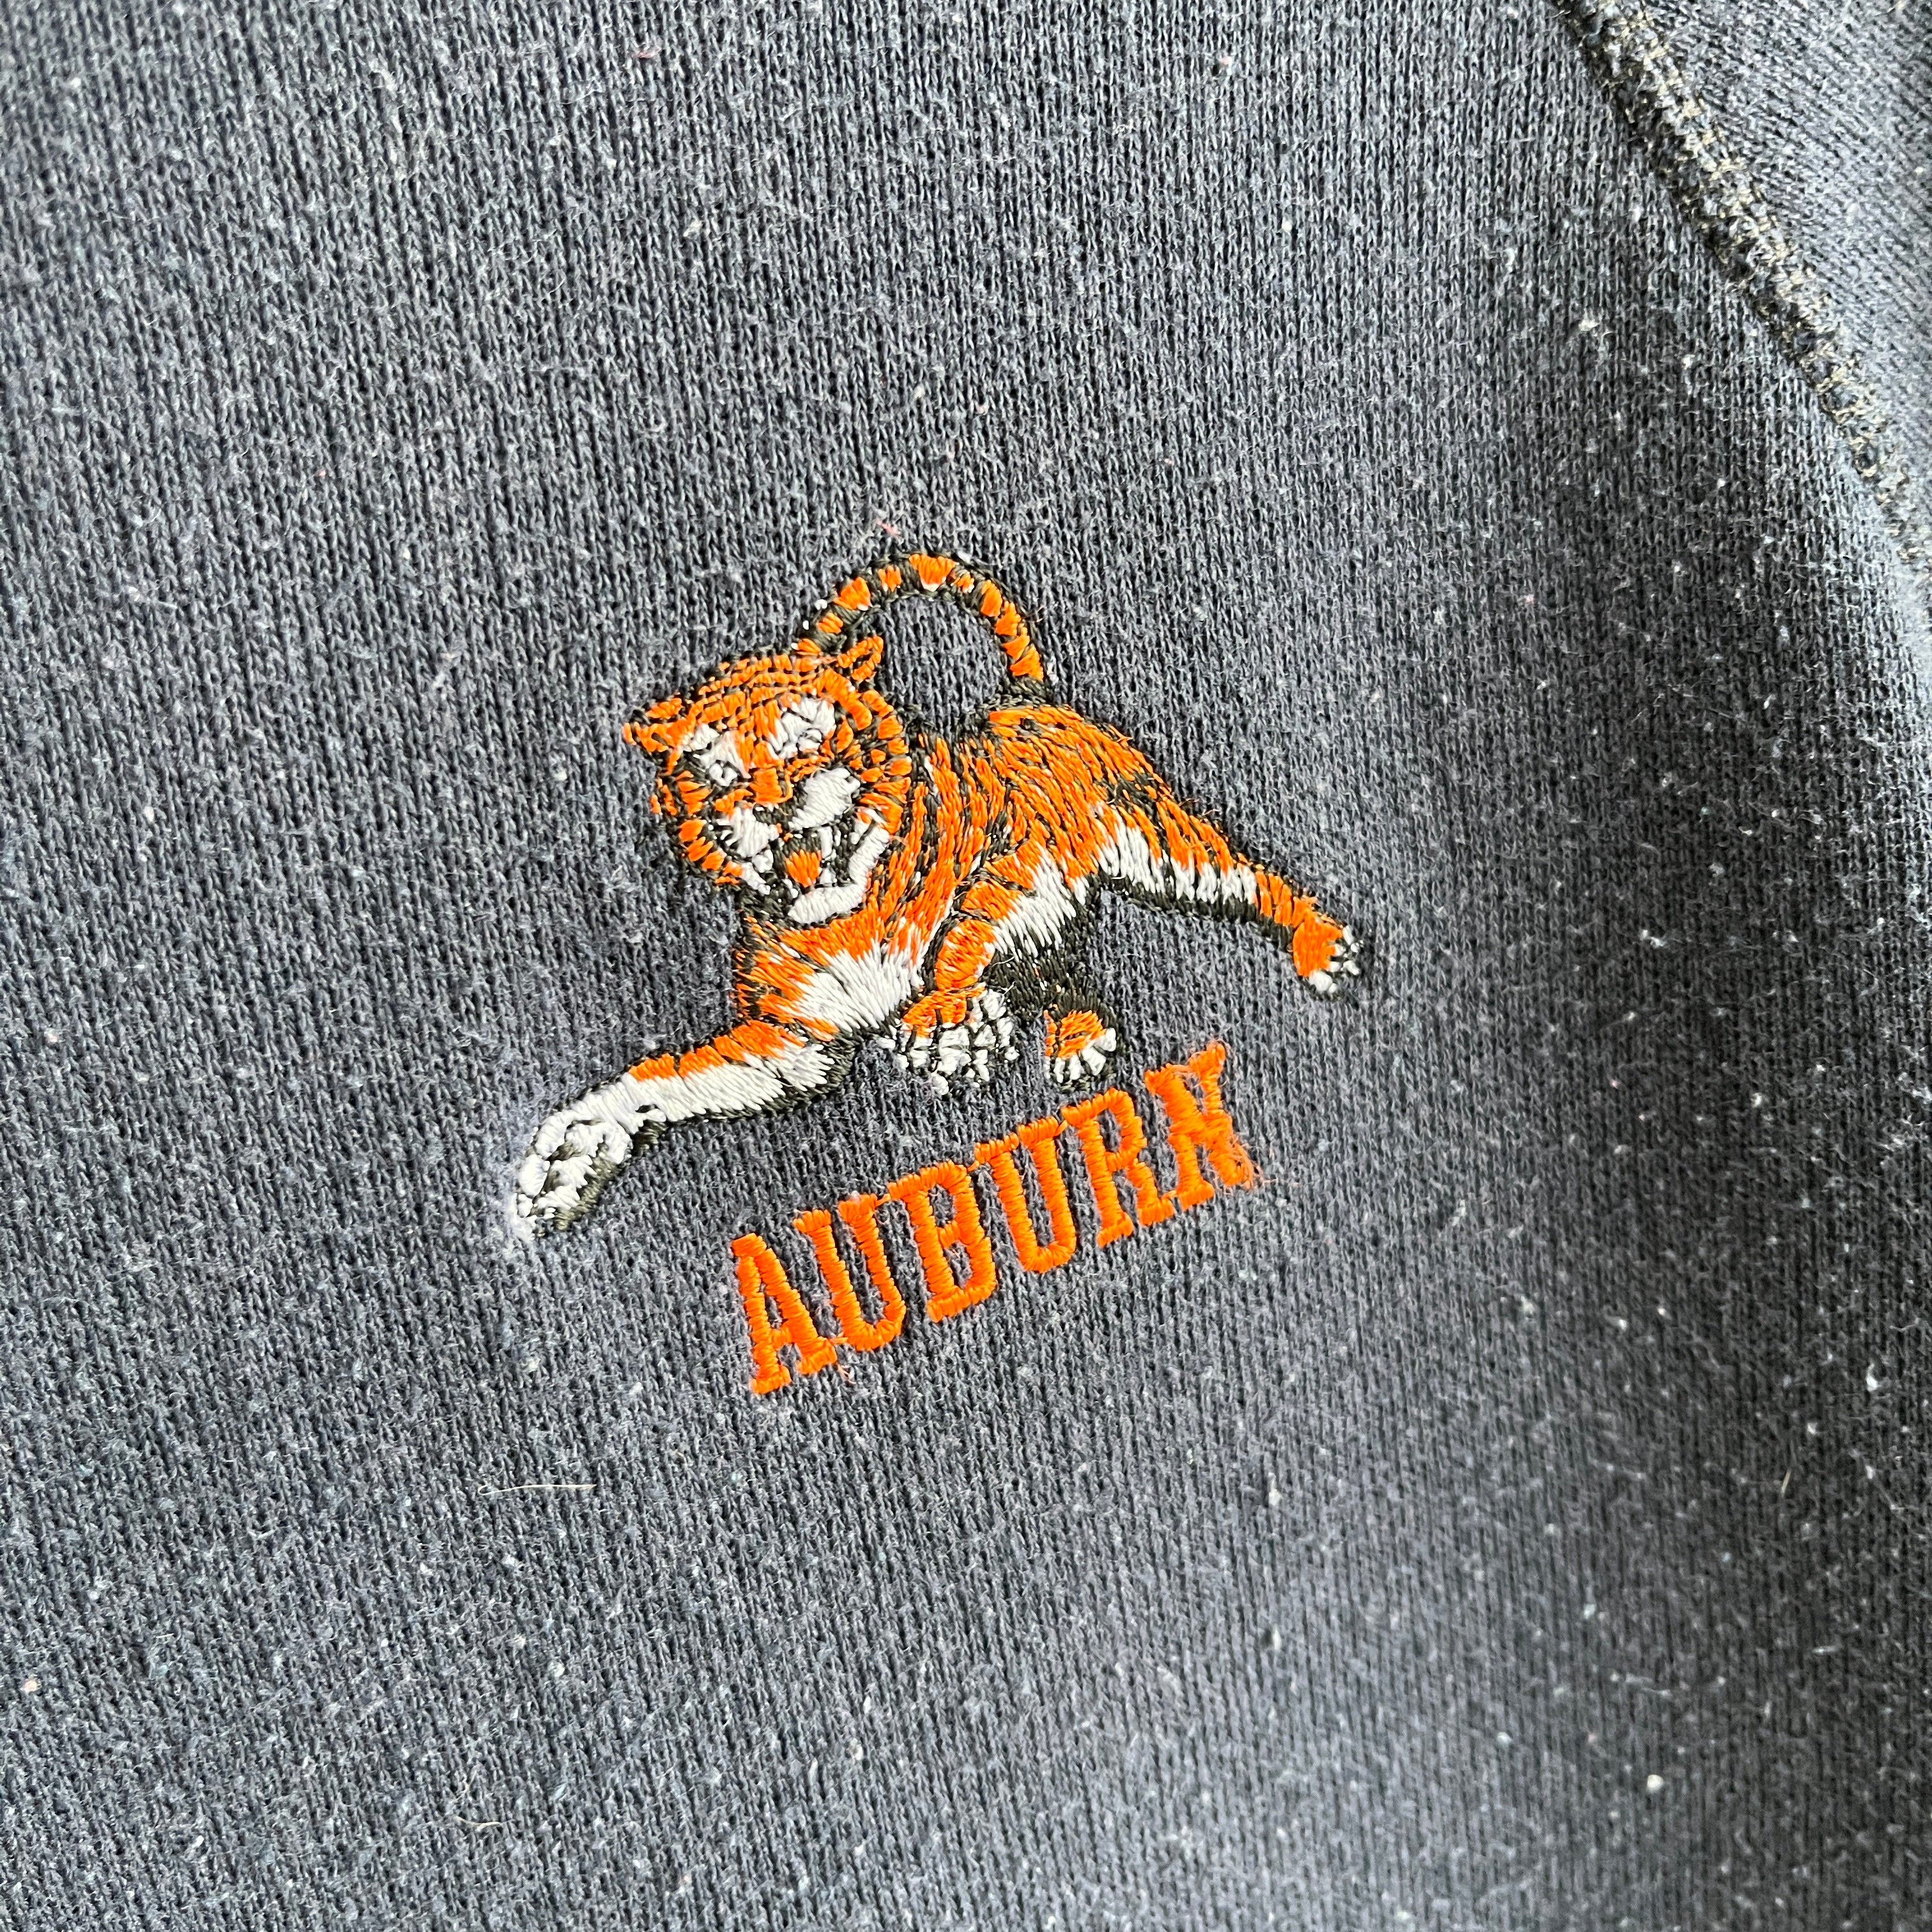 1980/90s Auburn Sweatshirt